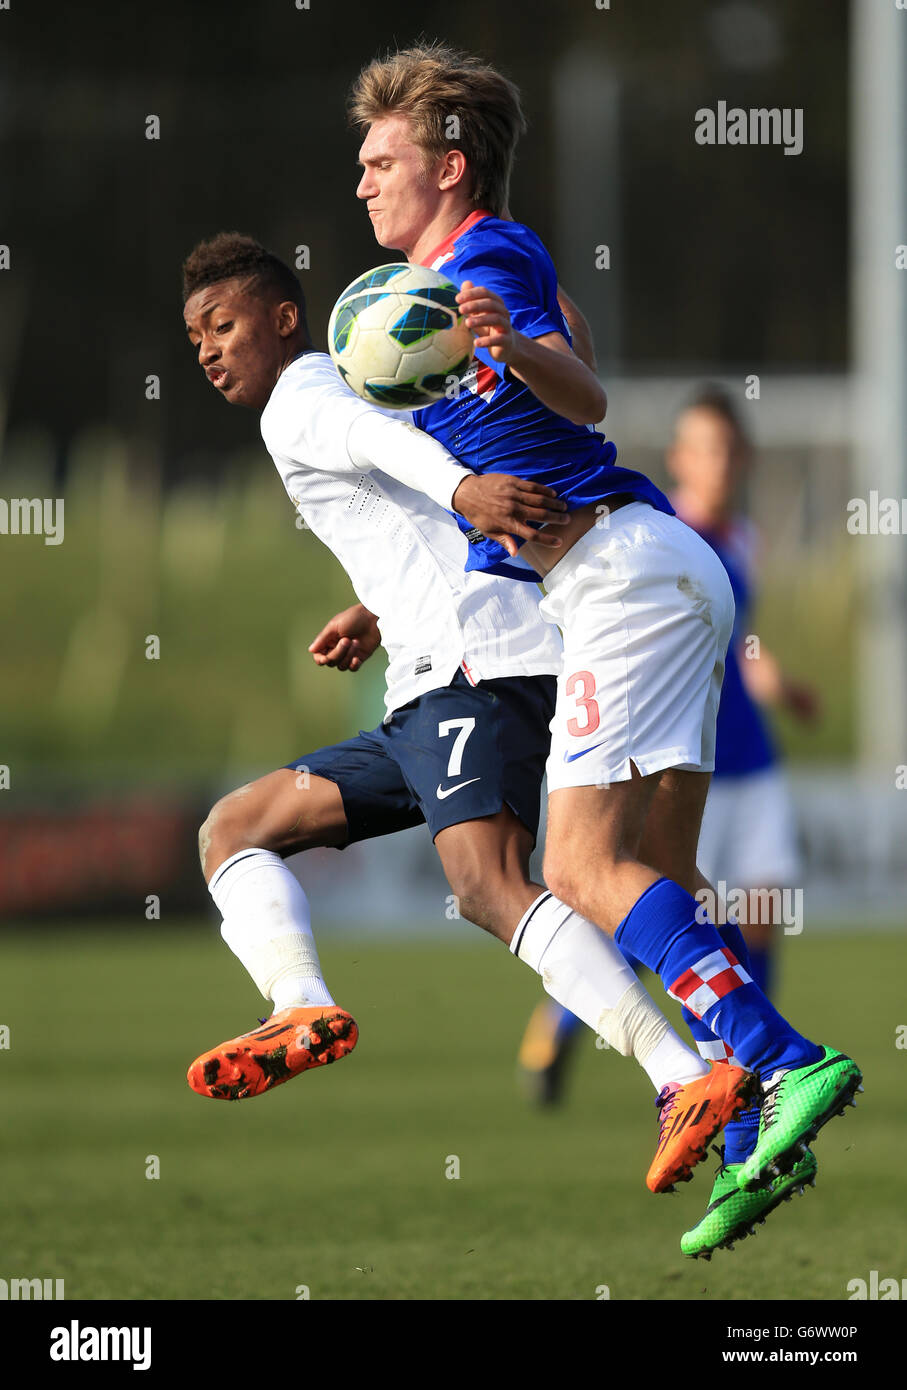 Calcio - Under 18 - Inghilterra / Croazia - St George's Park. Demarai Grey in Inghilterra e Petar Mamic in Croazia Foto Stock